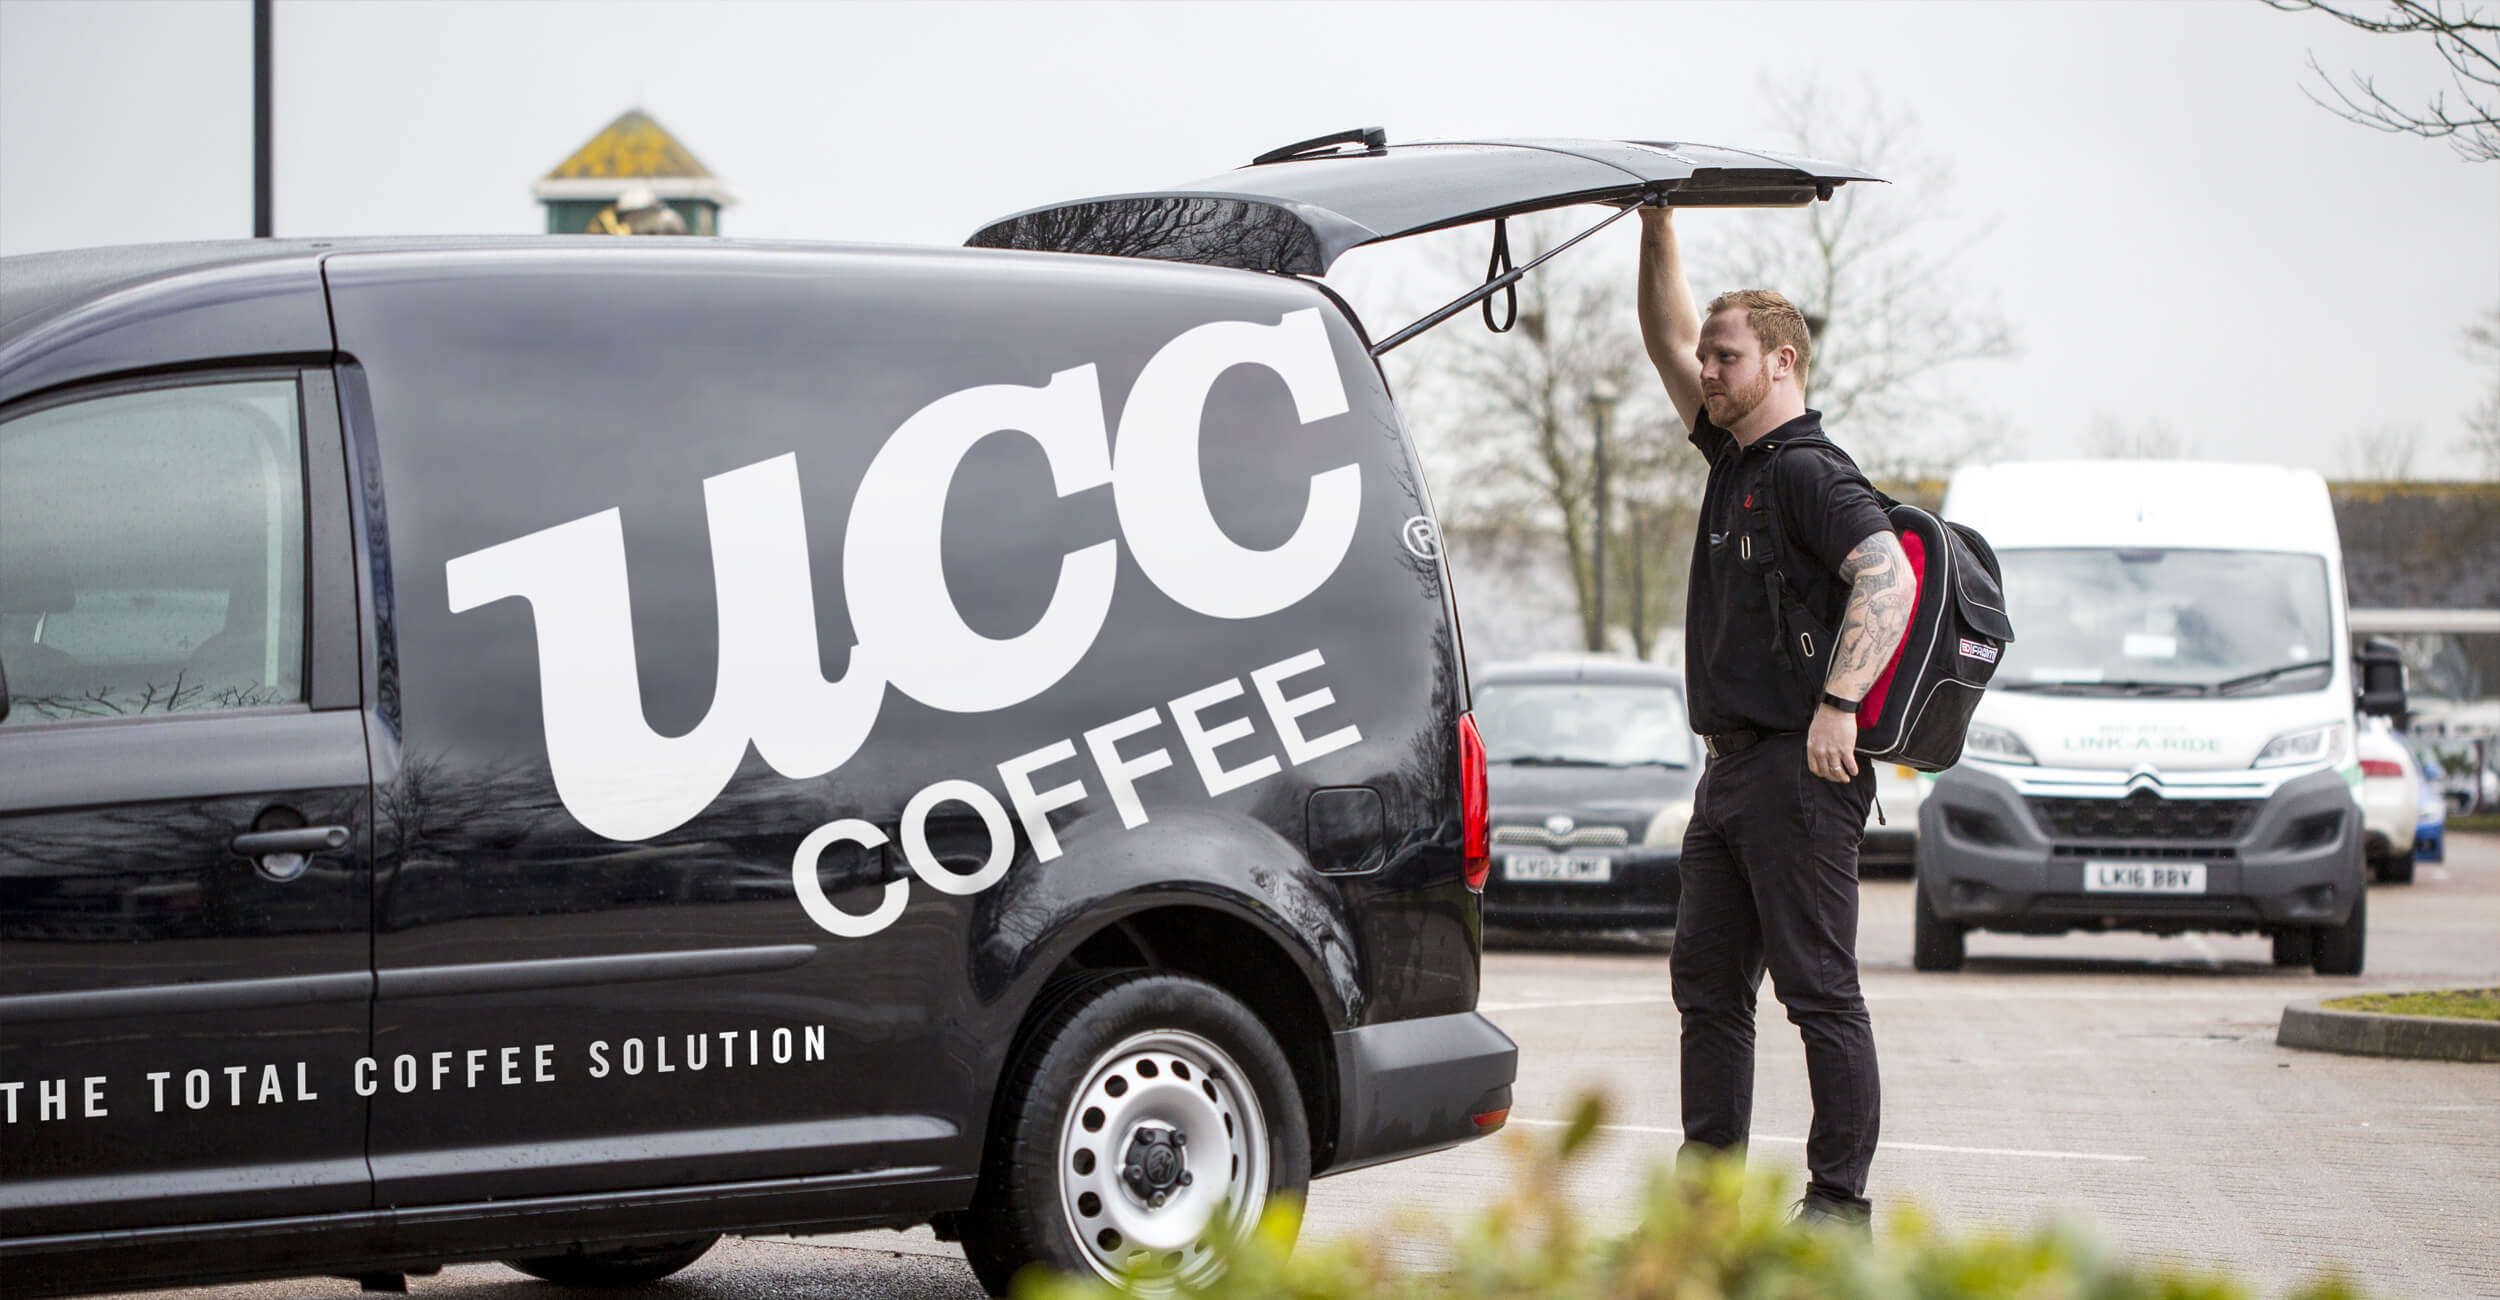 UCC-Coffee-engineer arriving on site